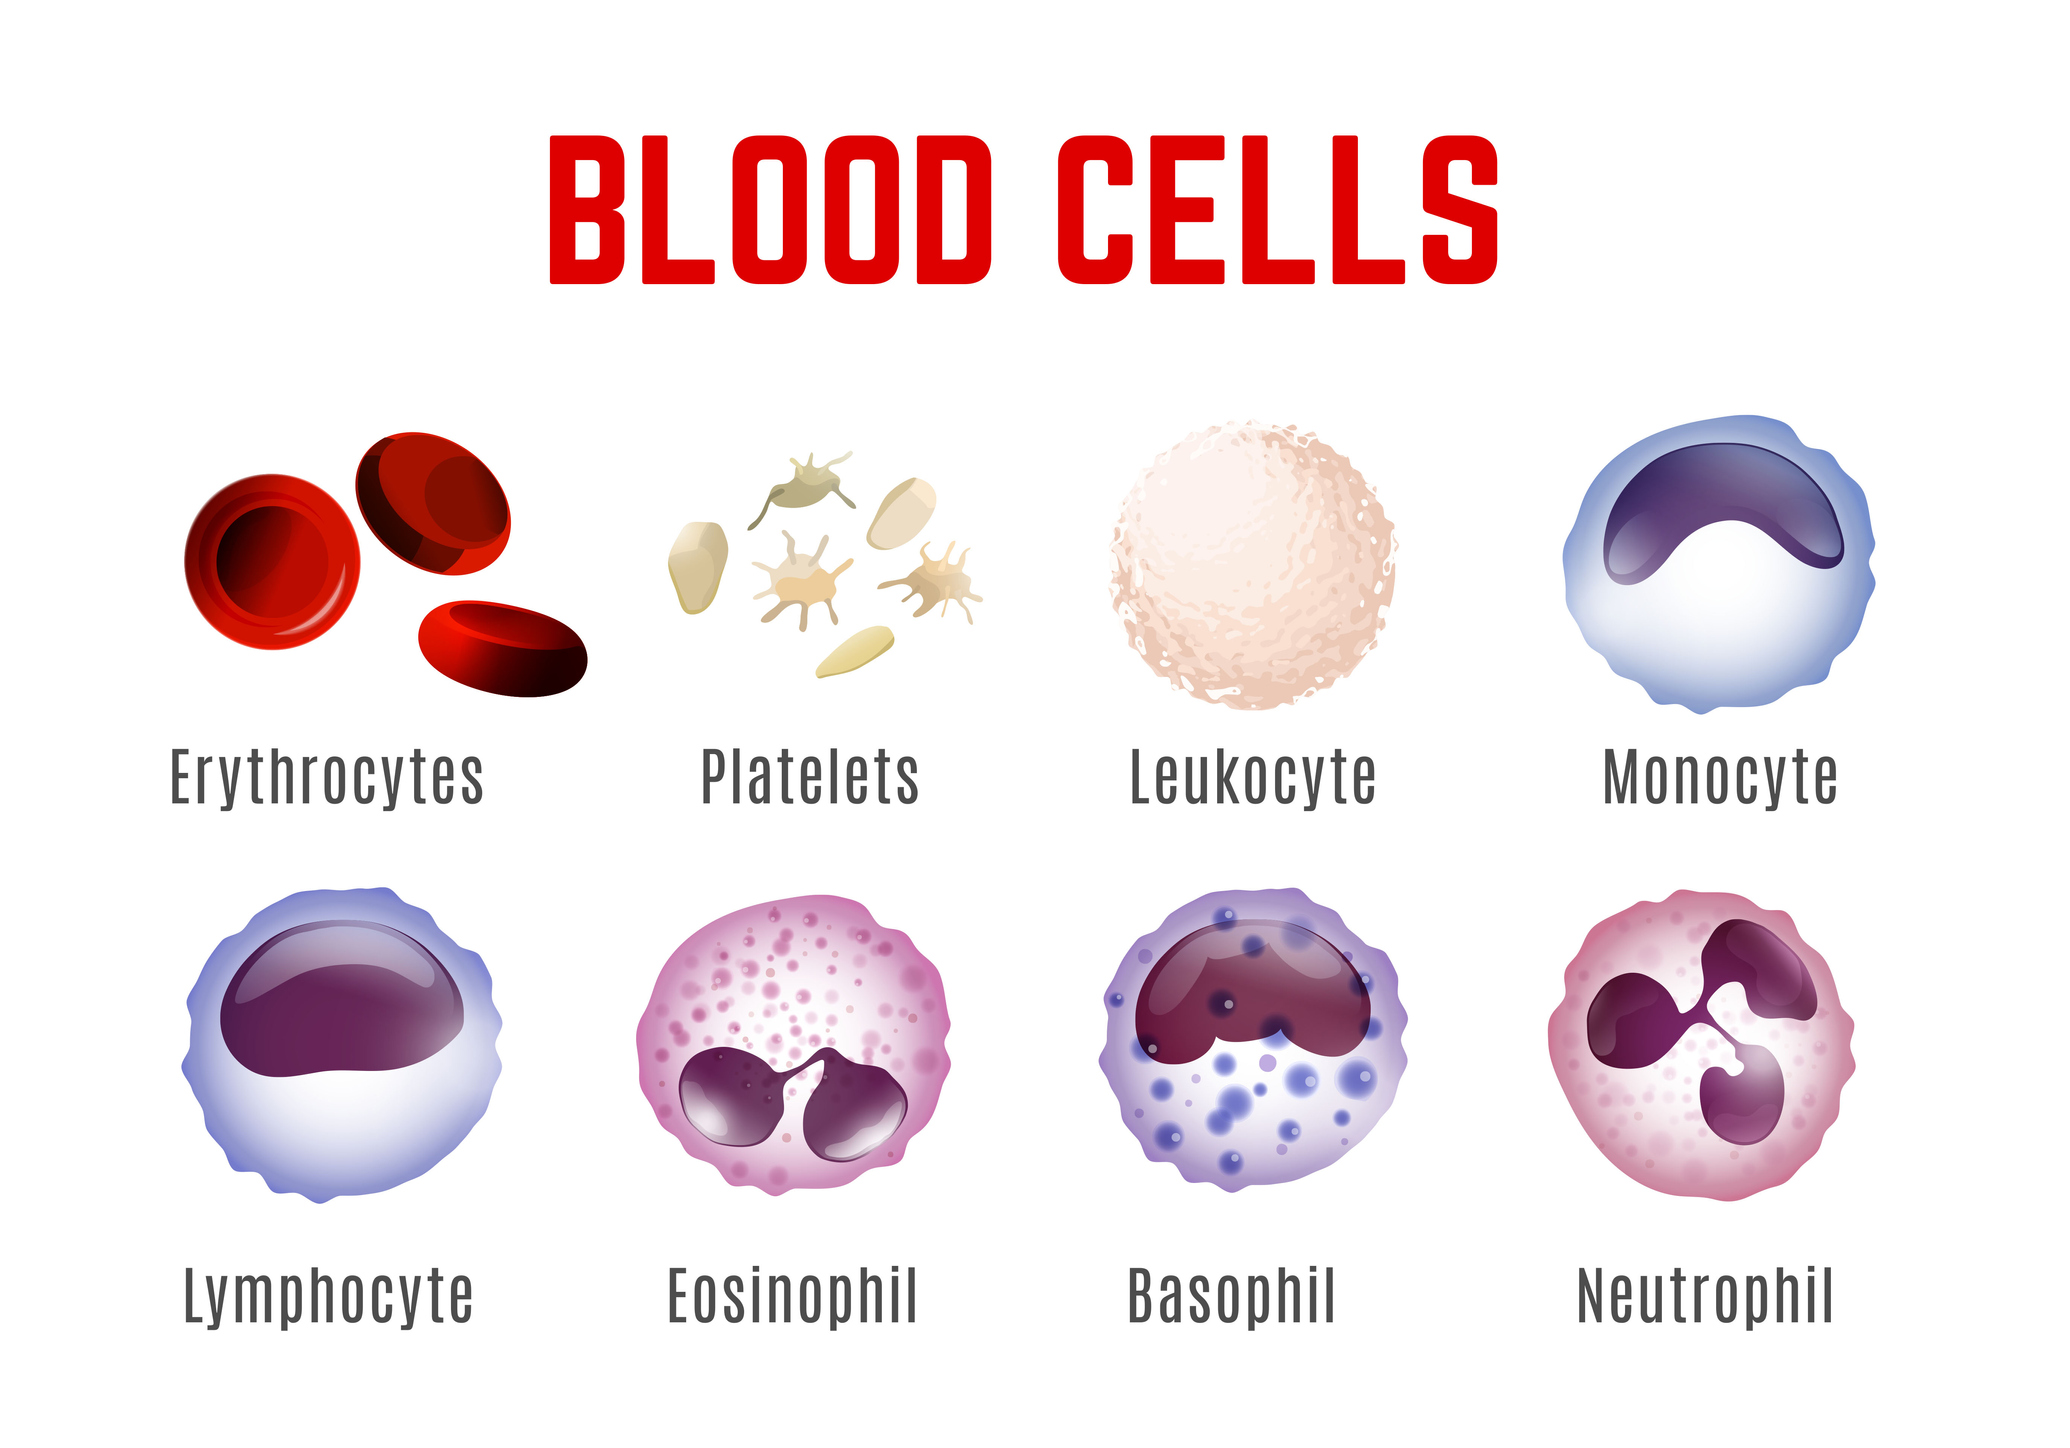 Display of blood cells - erythrocytes, platelets, leukocytes, monocytes, lymphocytes, eosinophils, basophils and neutrophils.